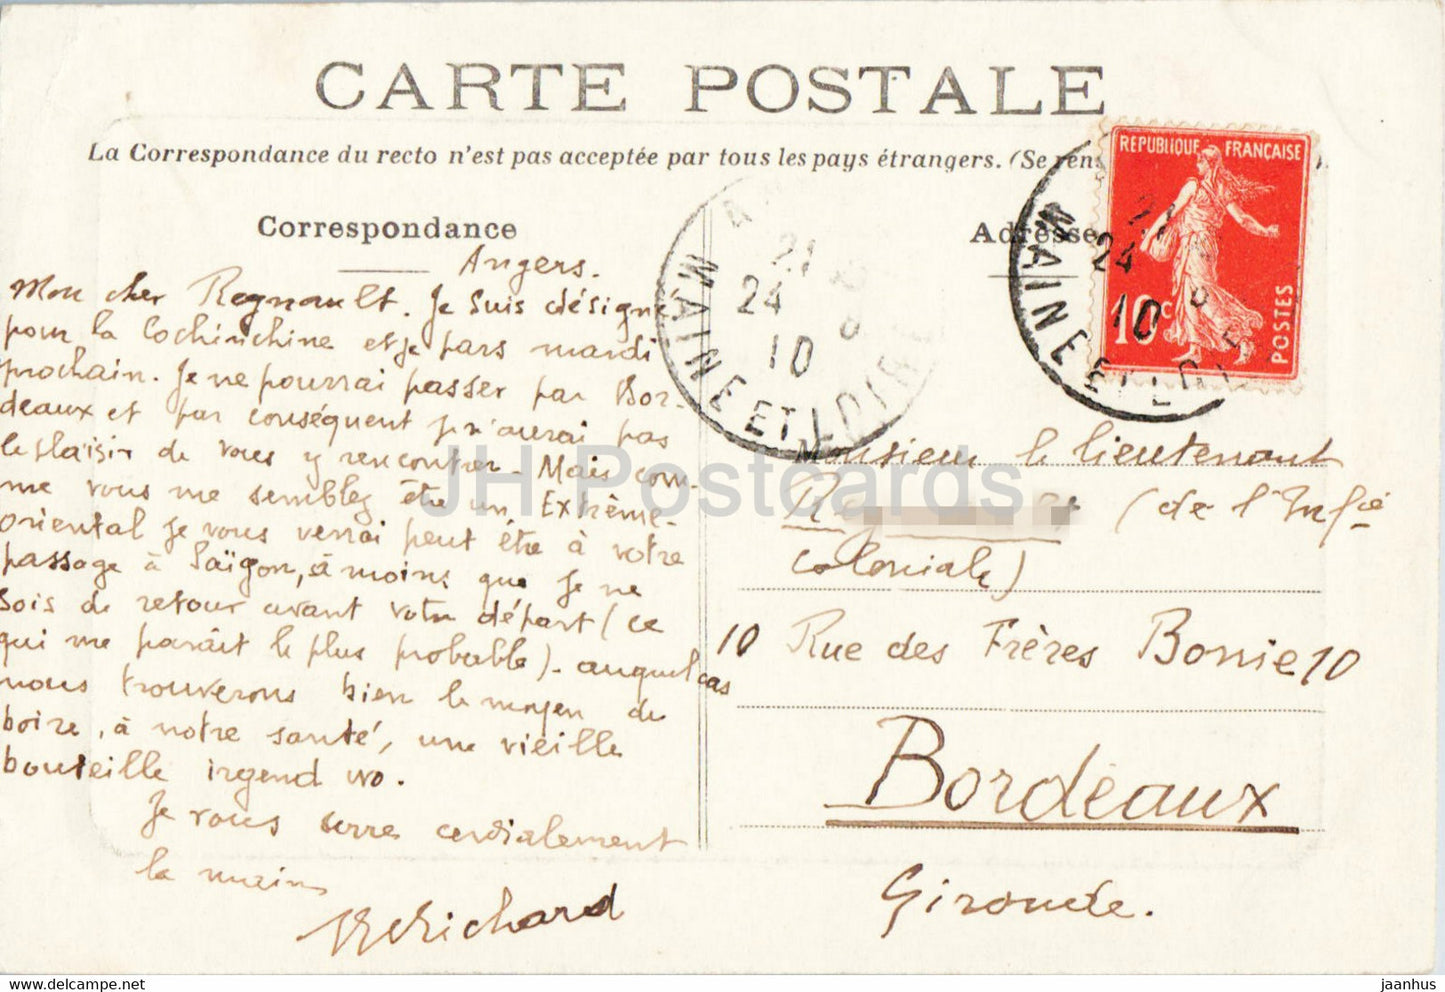 Angers - Statue du Roi Rene - 49 - old postcard - 1910 - France - used